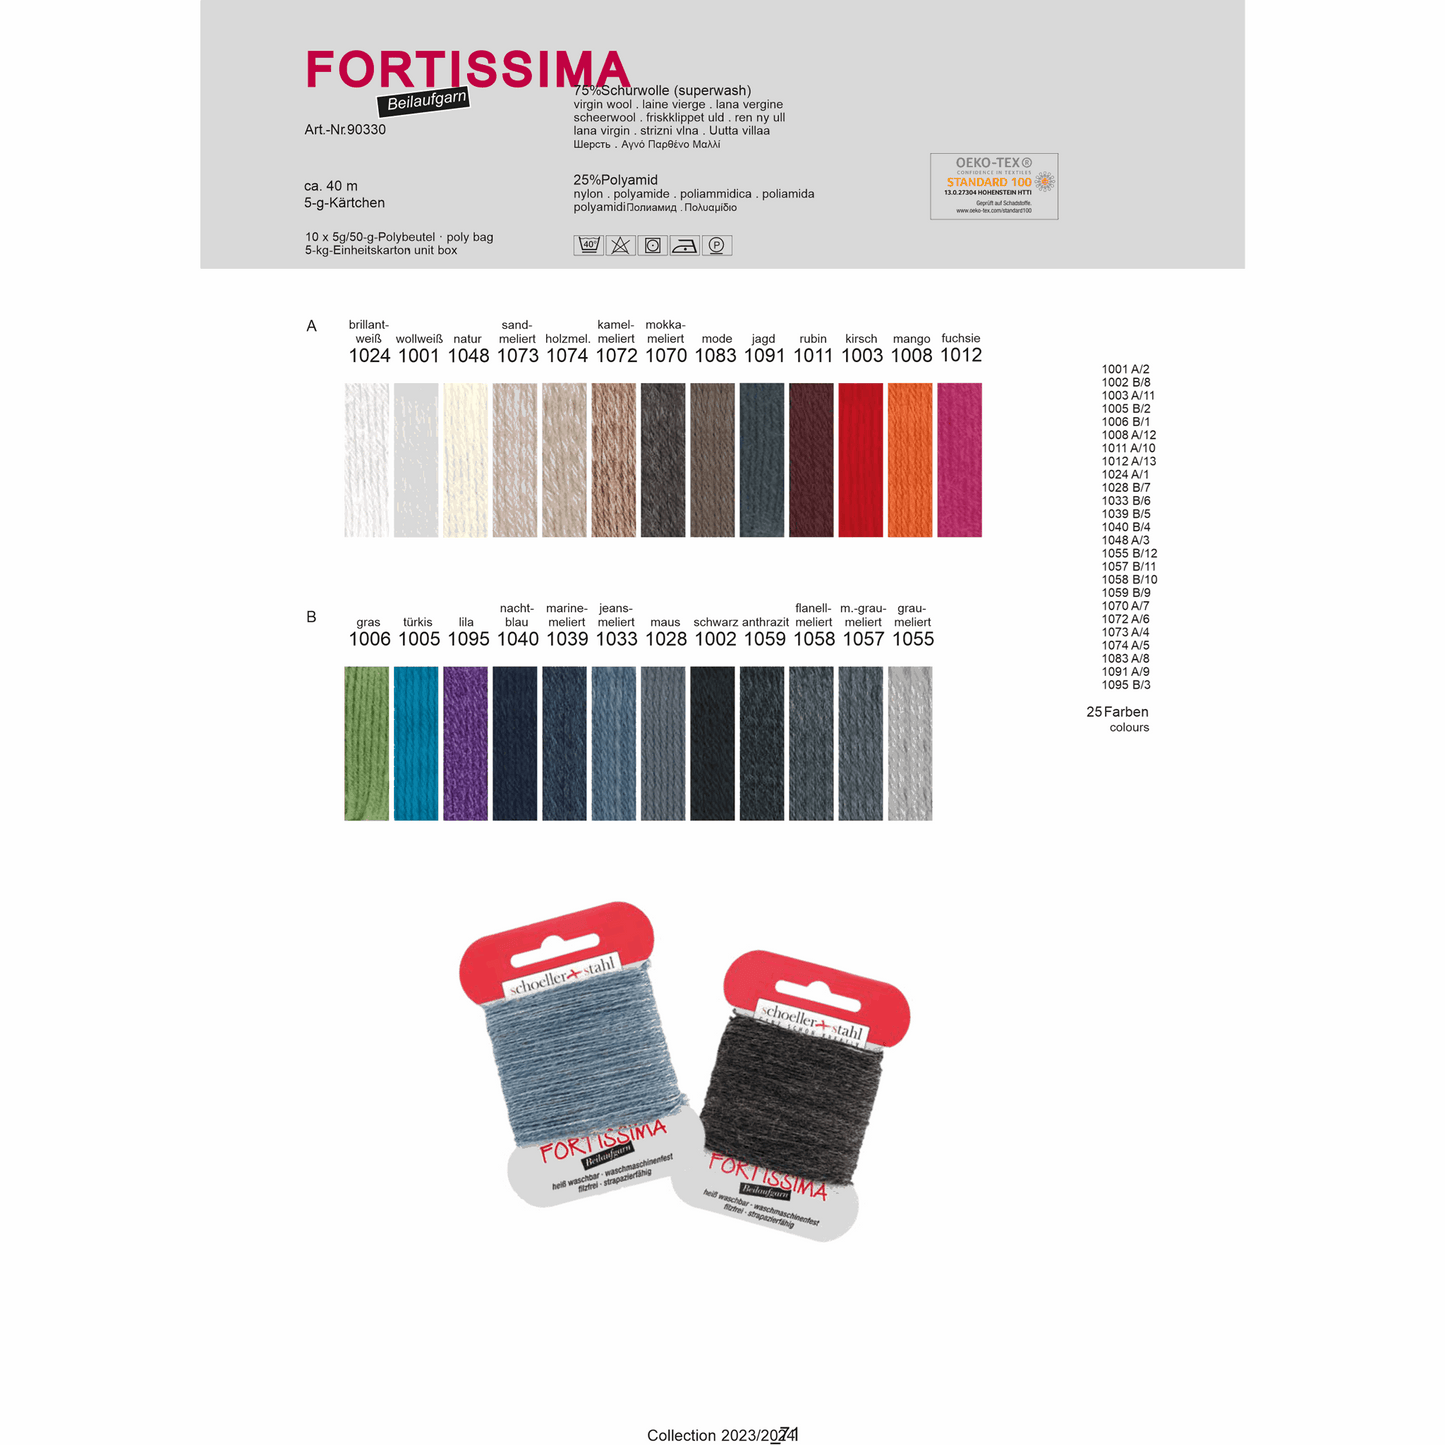 Fortissima thread 5g, 90330, color 1083, fashion